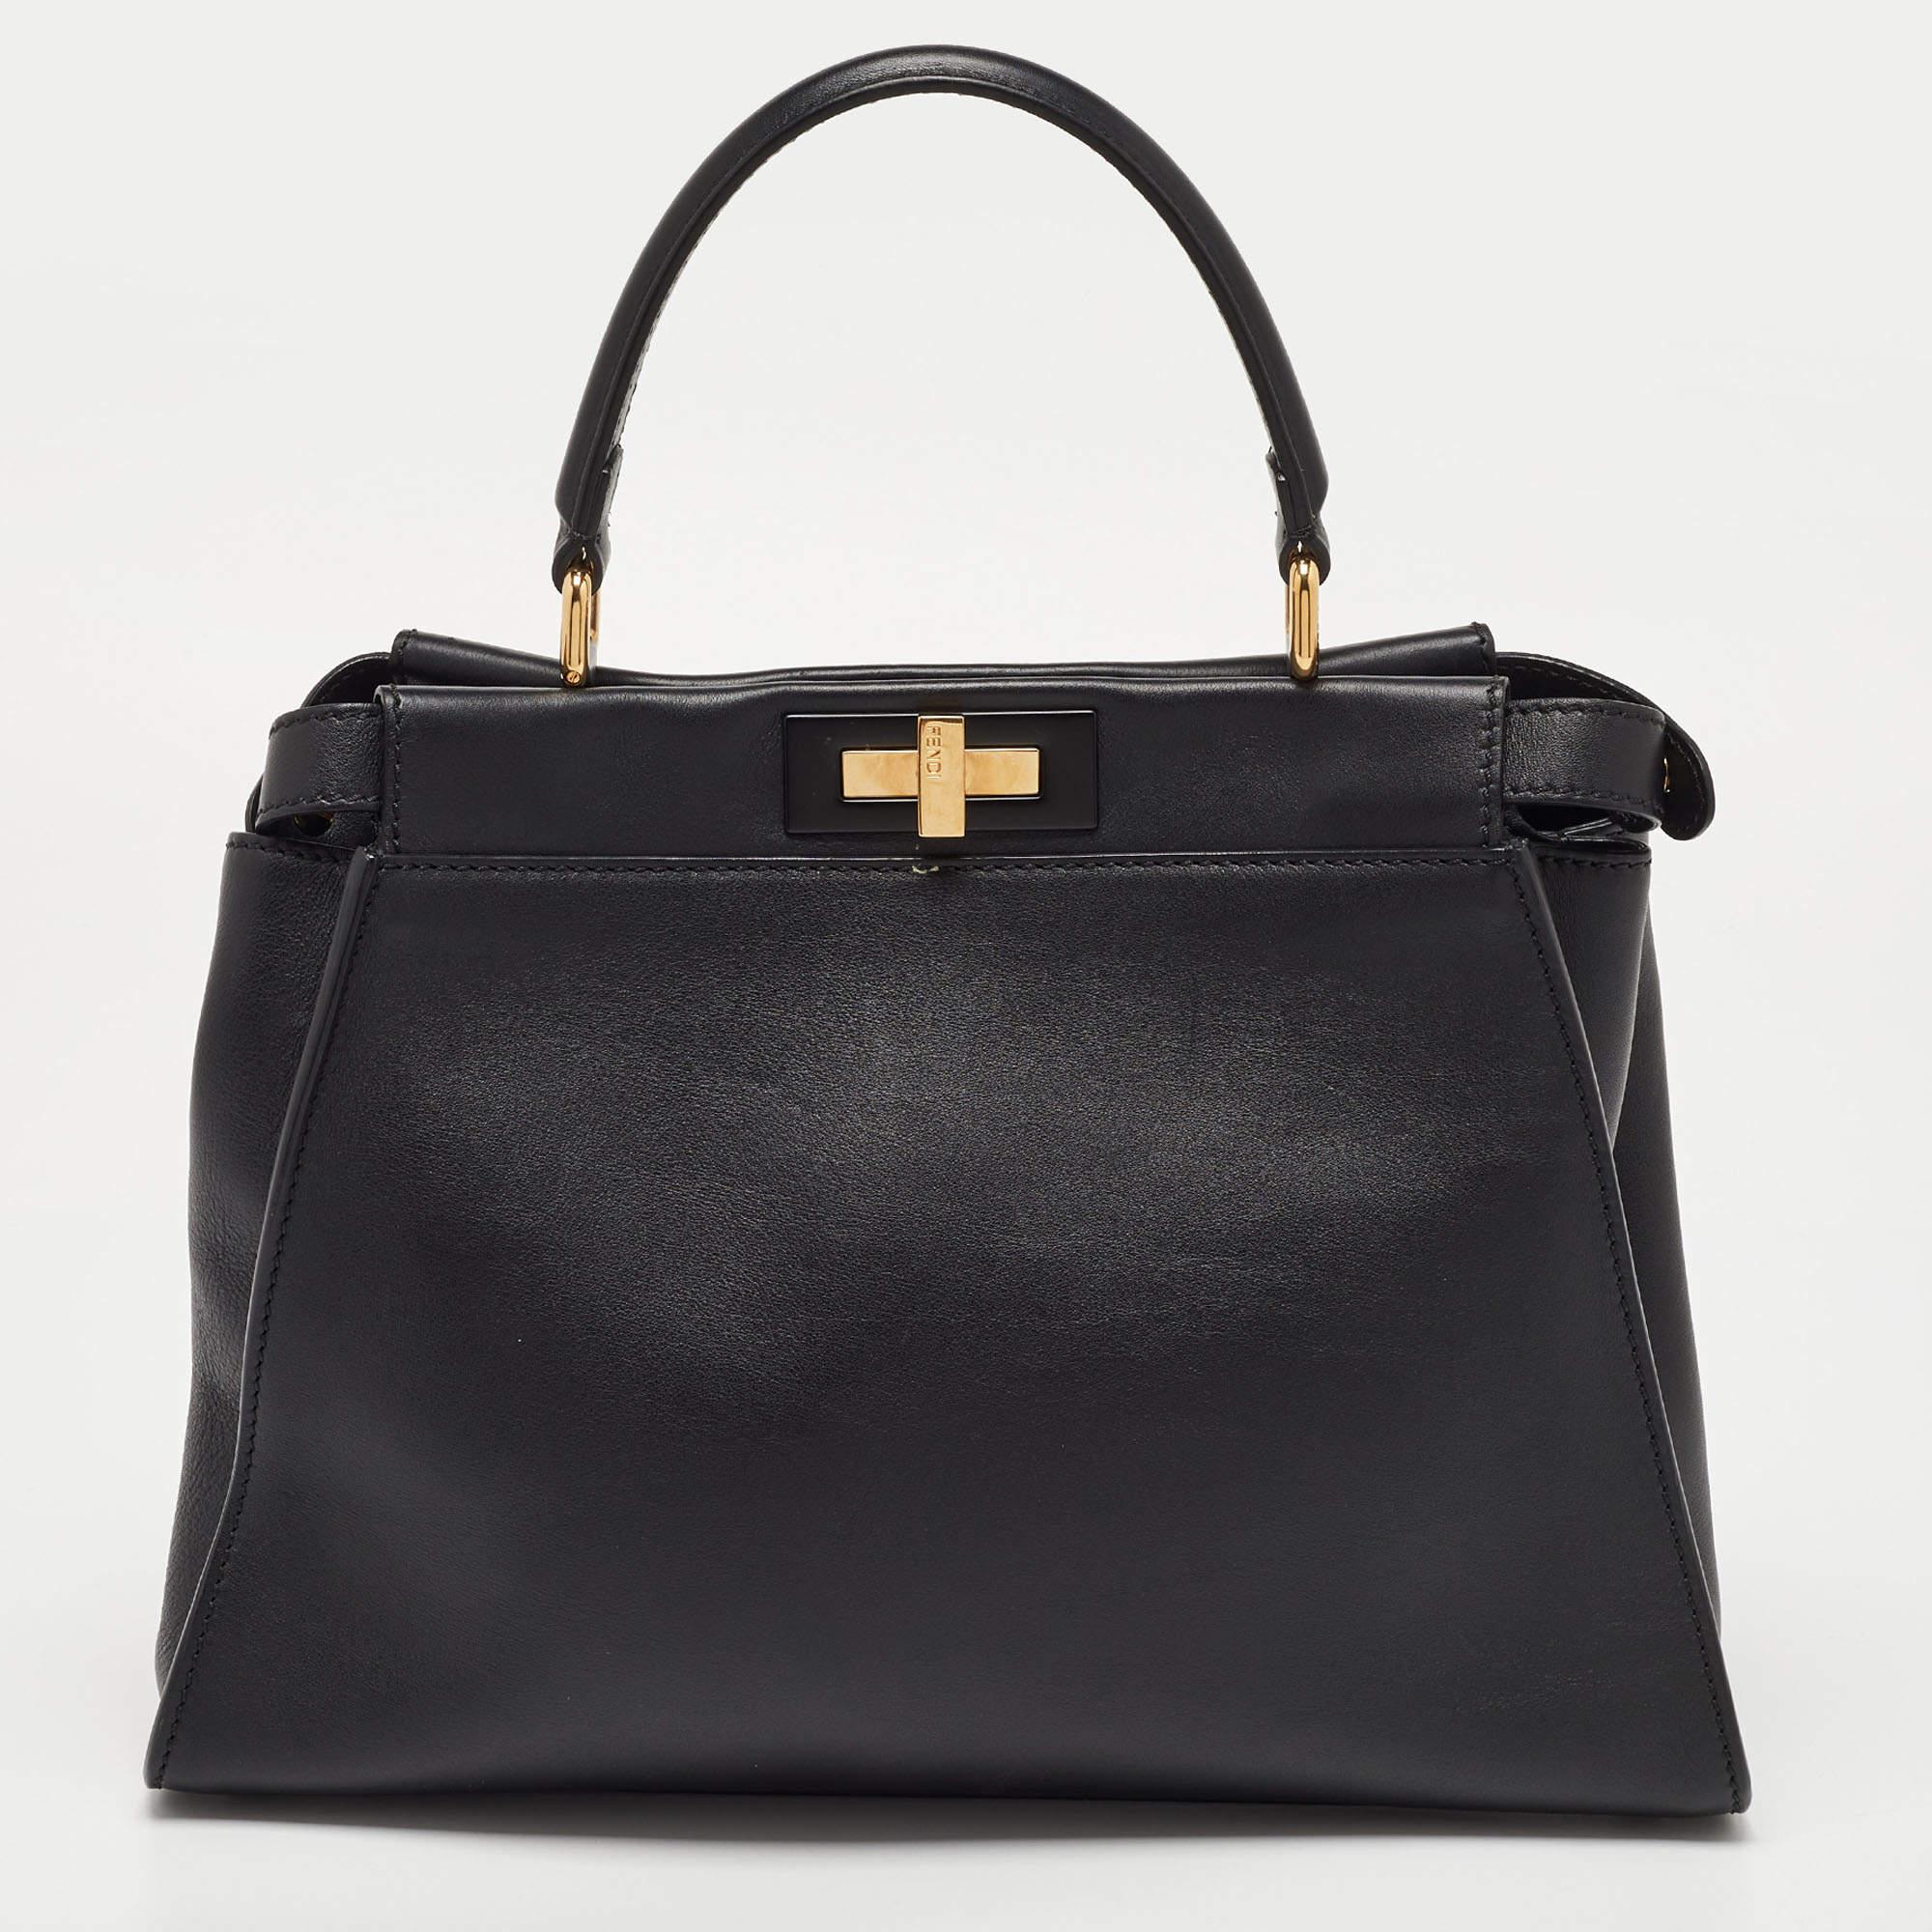 Fendi Black Leather Regular Peekaboo Top Handle Bag 2